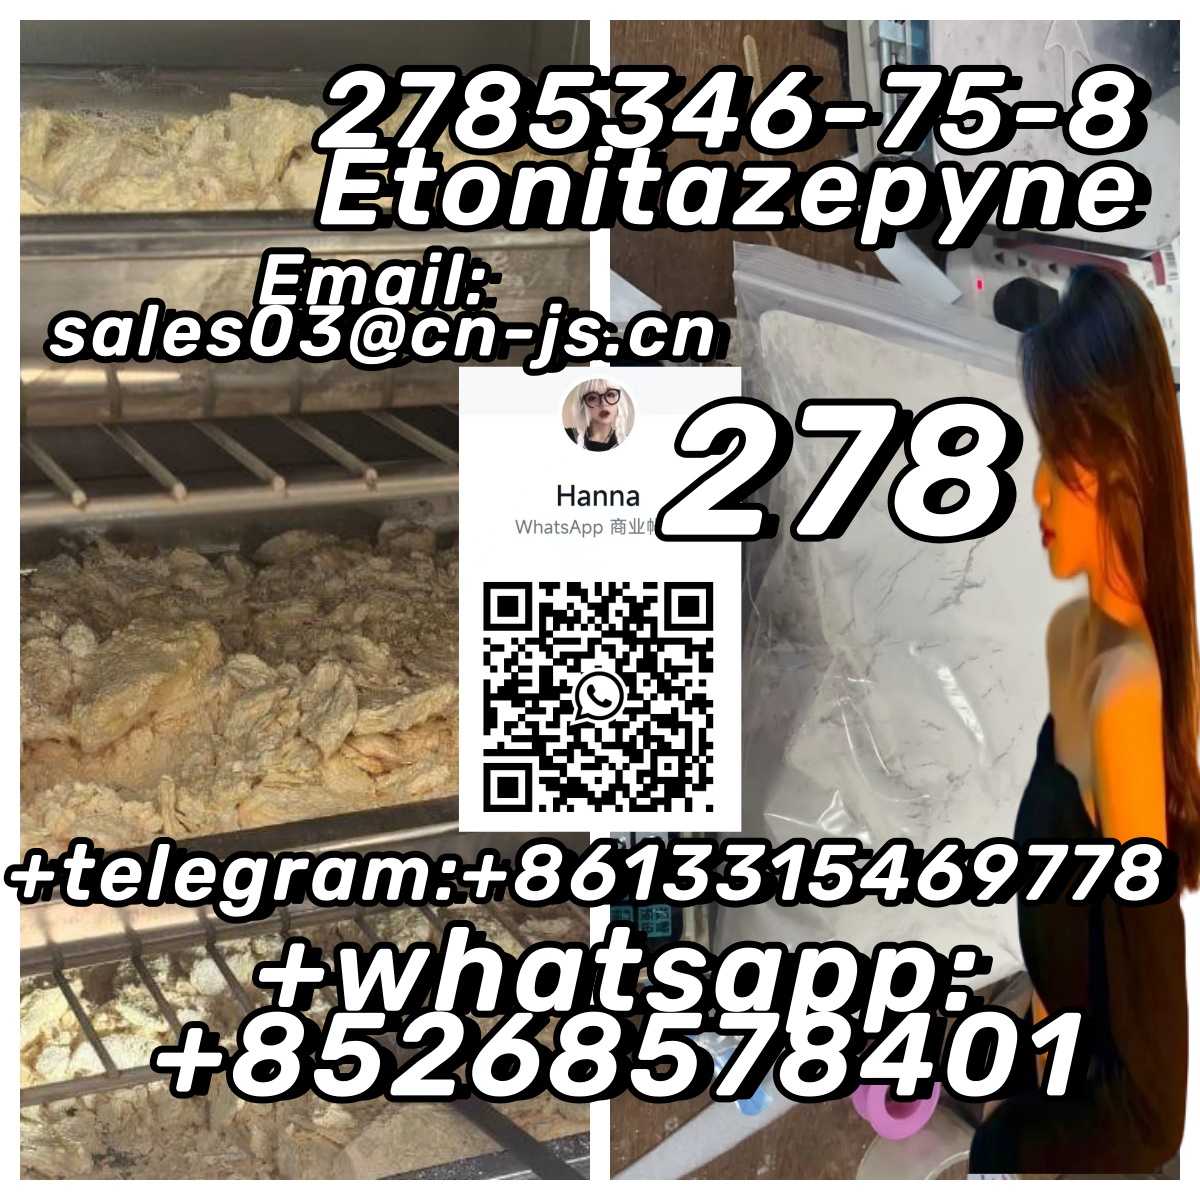 Free sample 2785346-75-8 Etonitazepyne,11,Cars,Free Classifieds,Post Free Ads,77traders.com